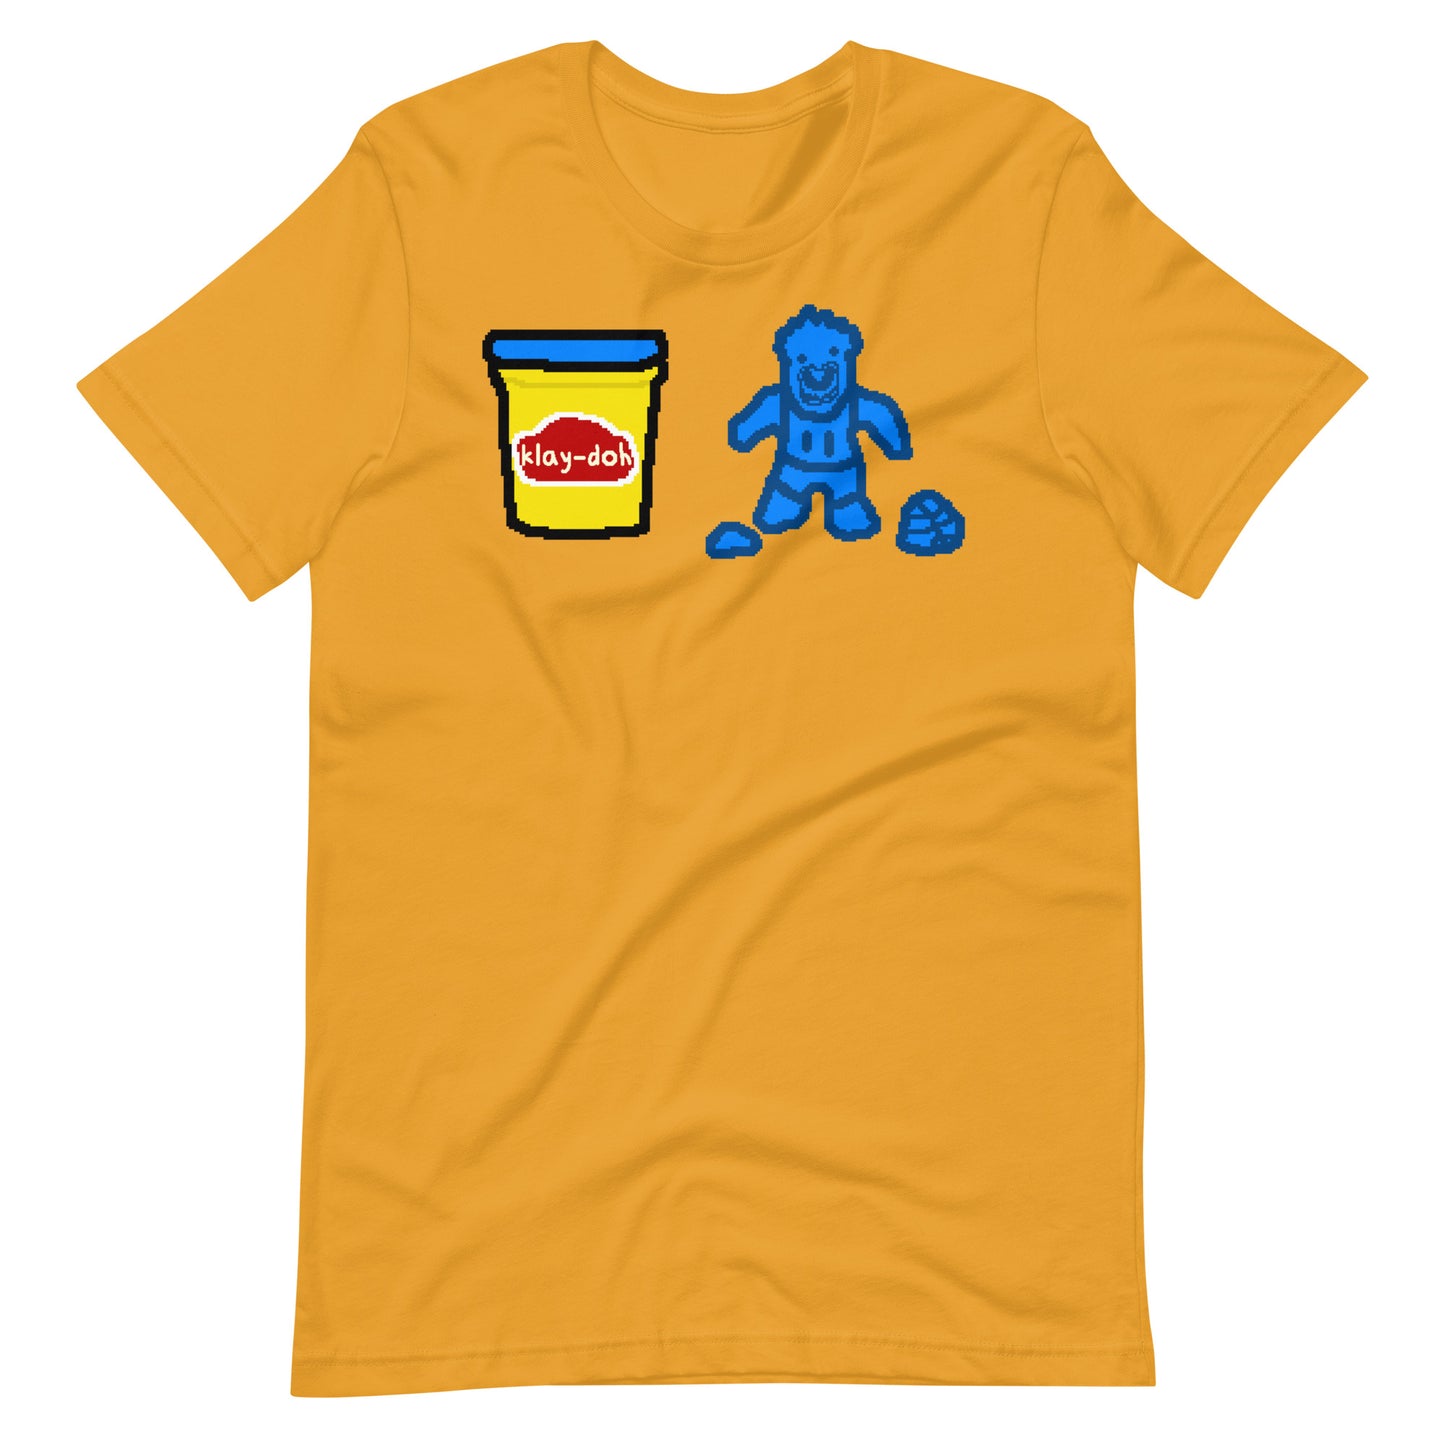 Klay-doh Thompson Shirt